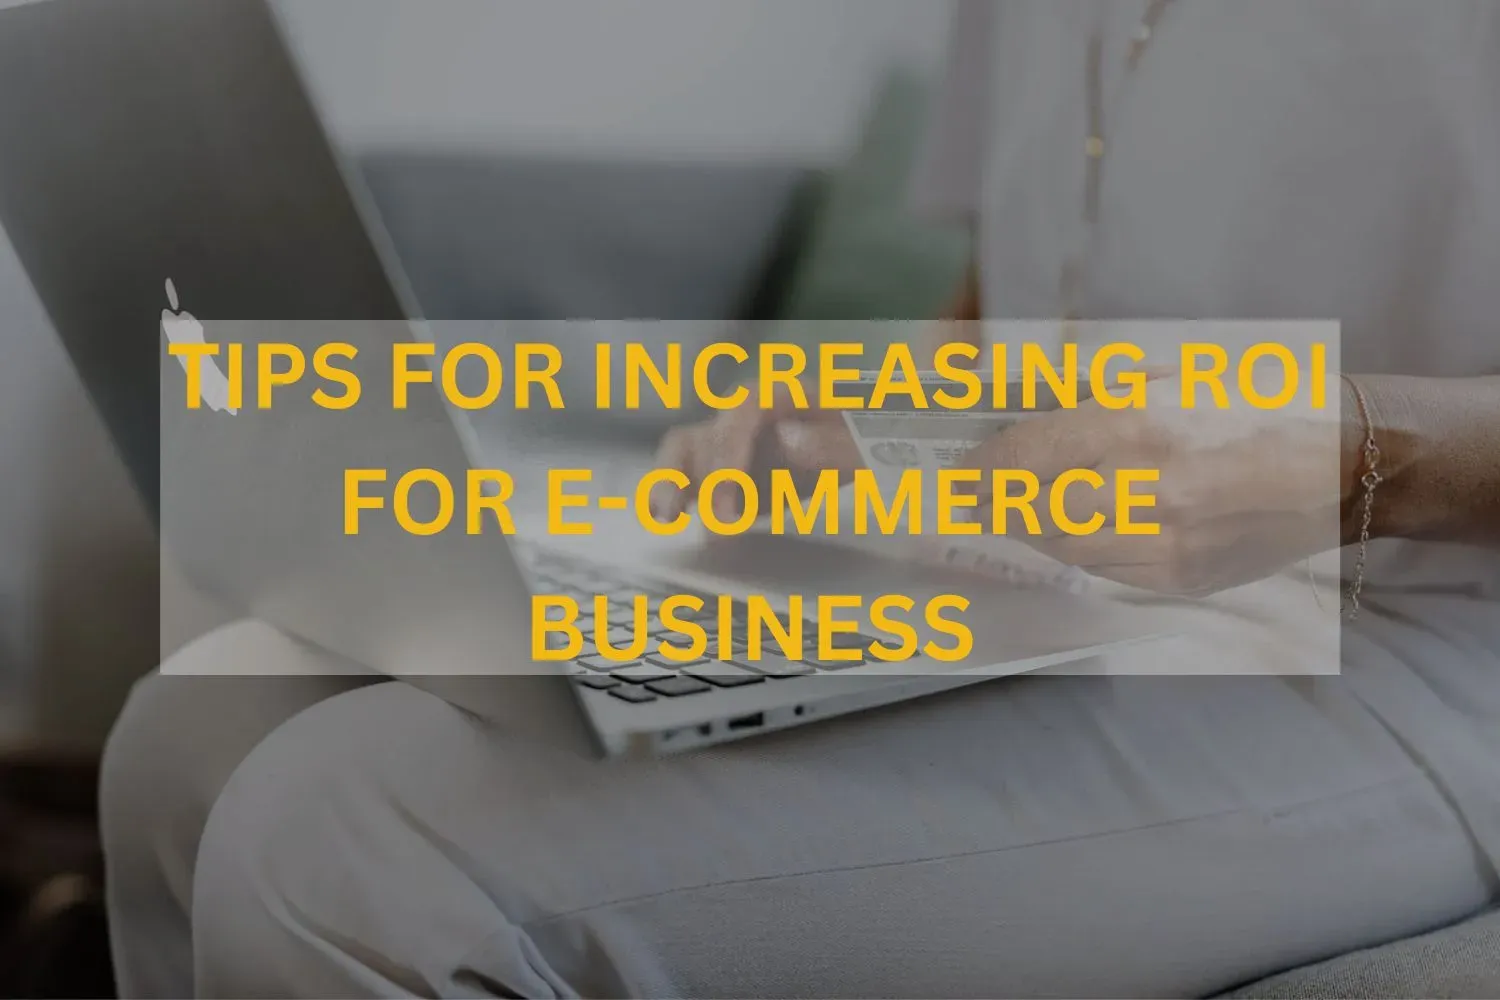 Improve ROI for E-Commerce Business